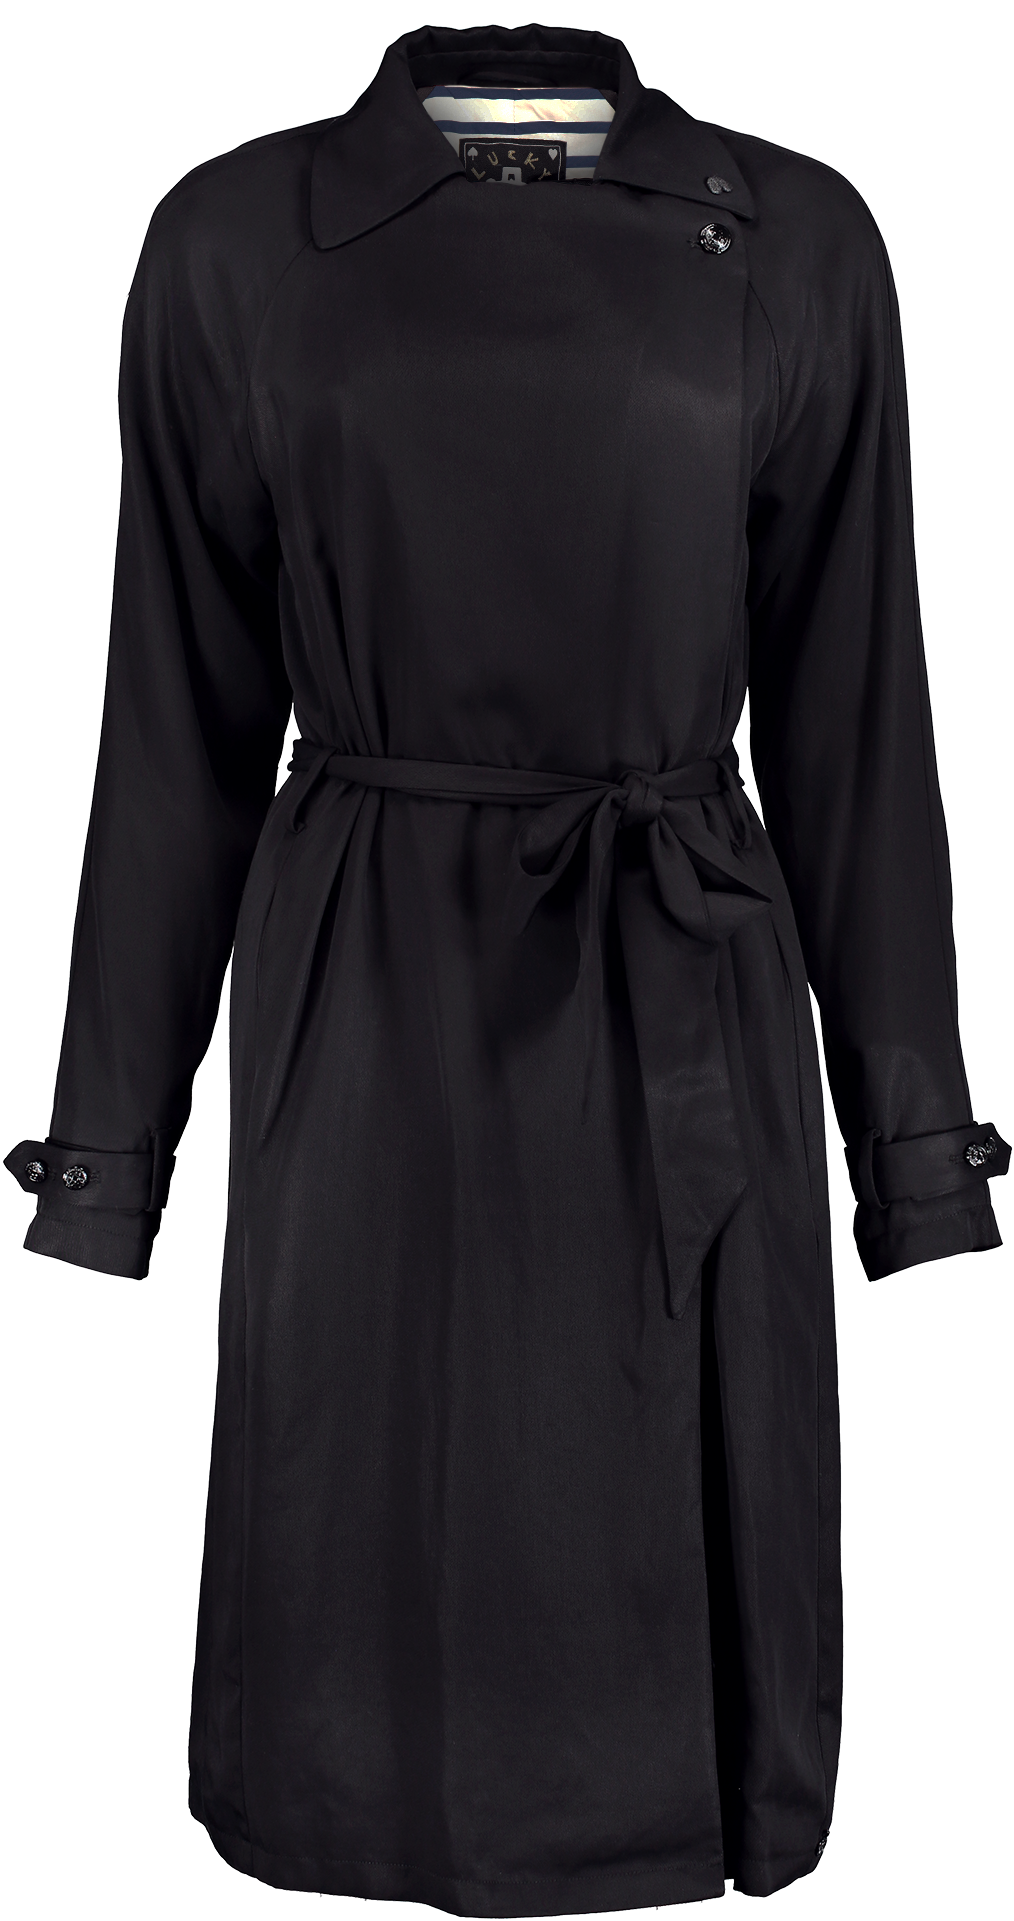 Loose Fit Trench Coat Black - Isabel Marant Molan Dress (1280x1920), Png Download